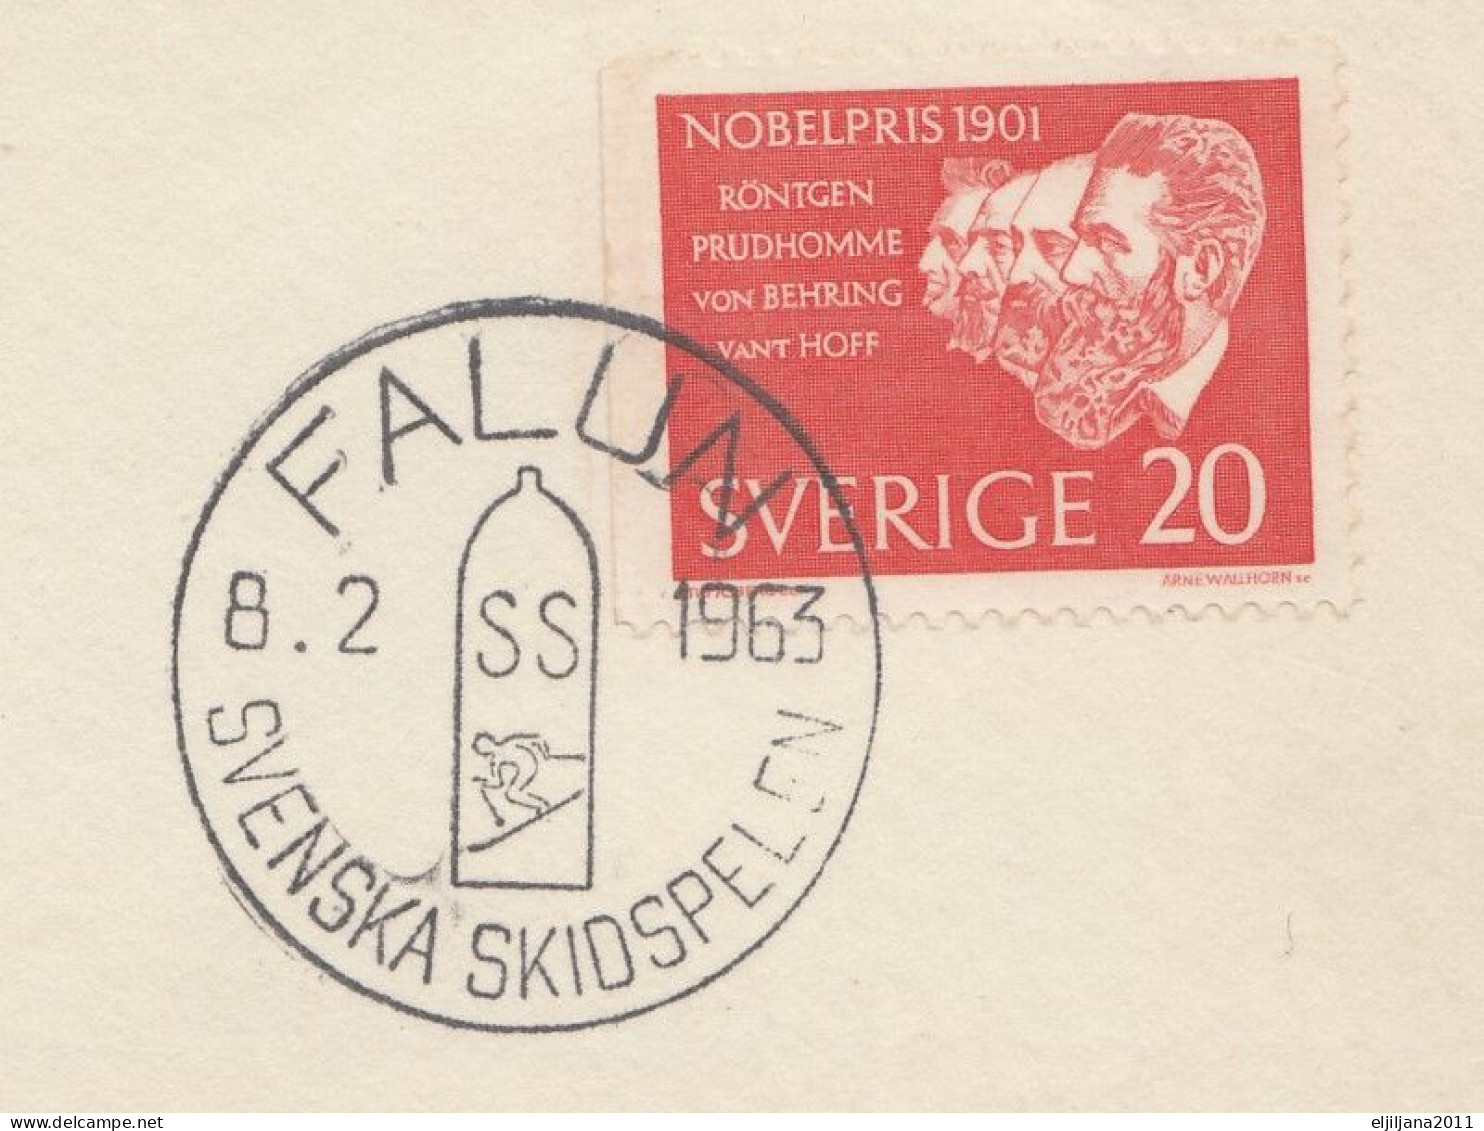 Action !! SALE !! 50 % OFF !! ⁕ Sweden / Sverige 1963  Skiing FALUN, SUNDSVALL, LULEA  3v Covers - Cartas & Documentos